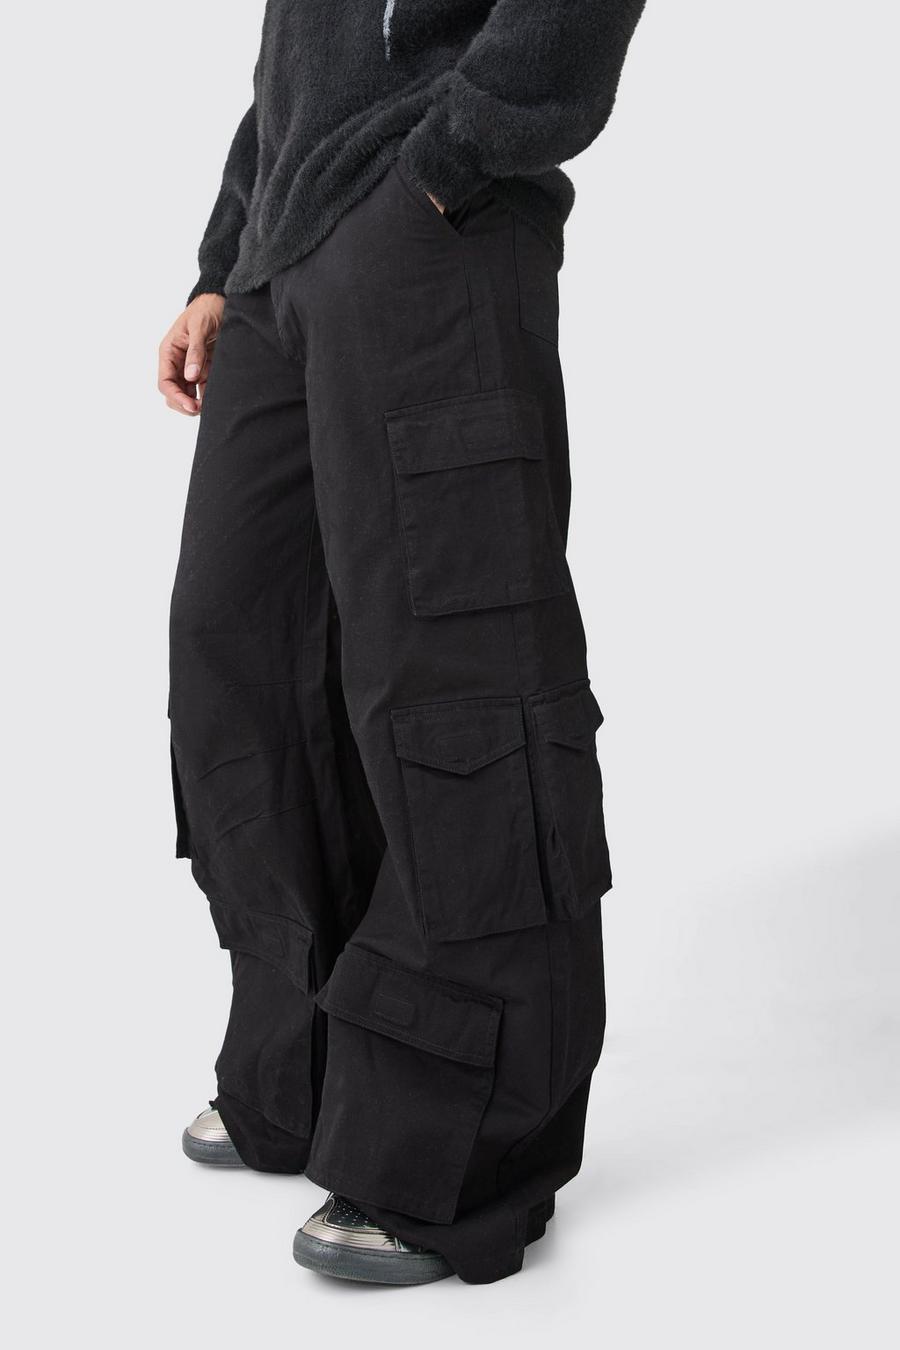 Black Extreme Baggy Rigid Multi Cargo Pocket Trousers